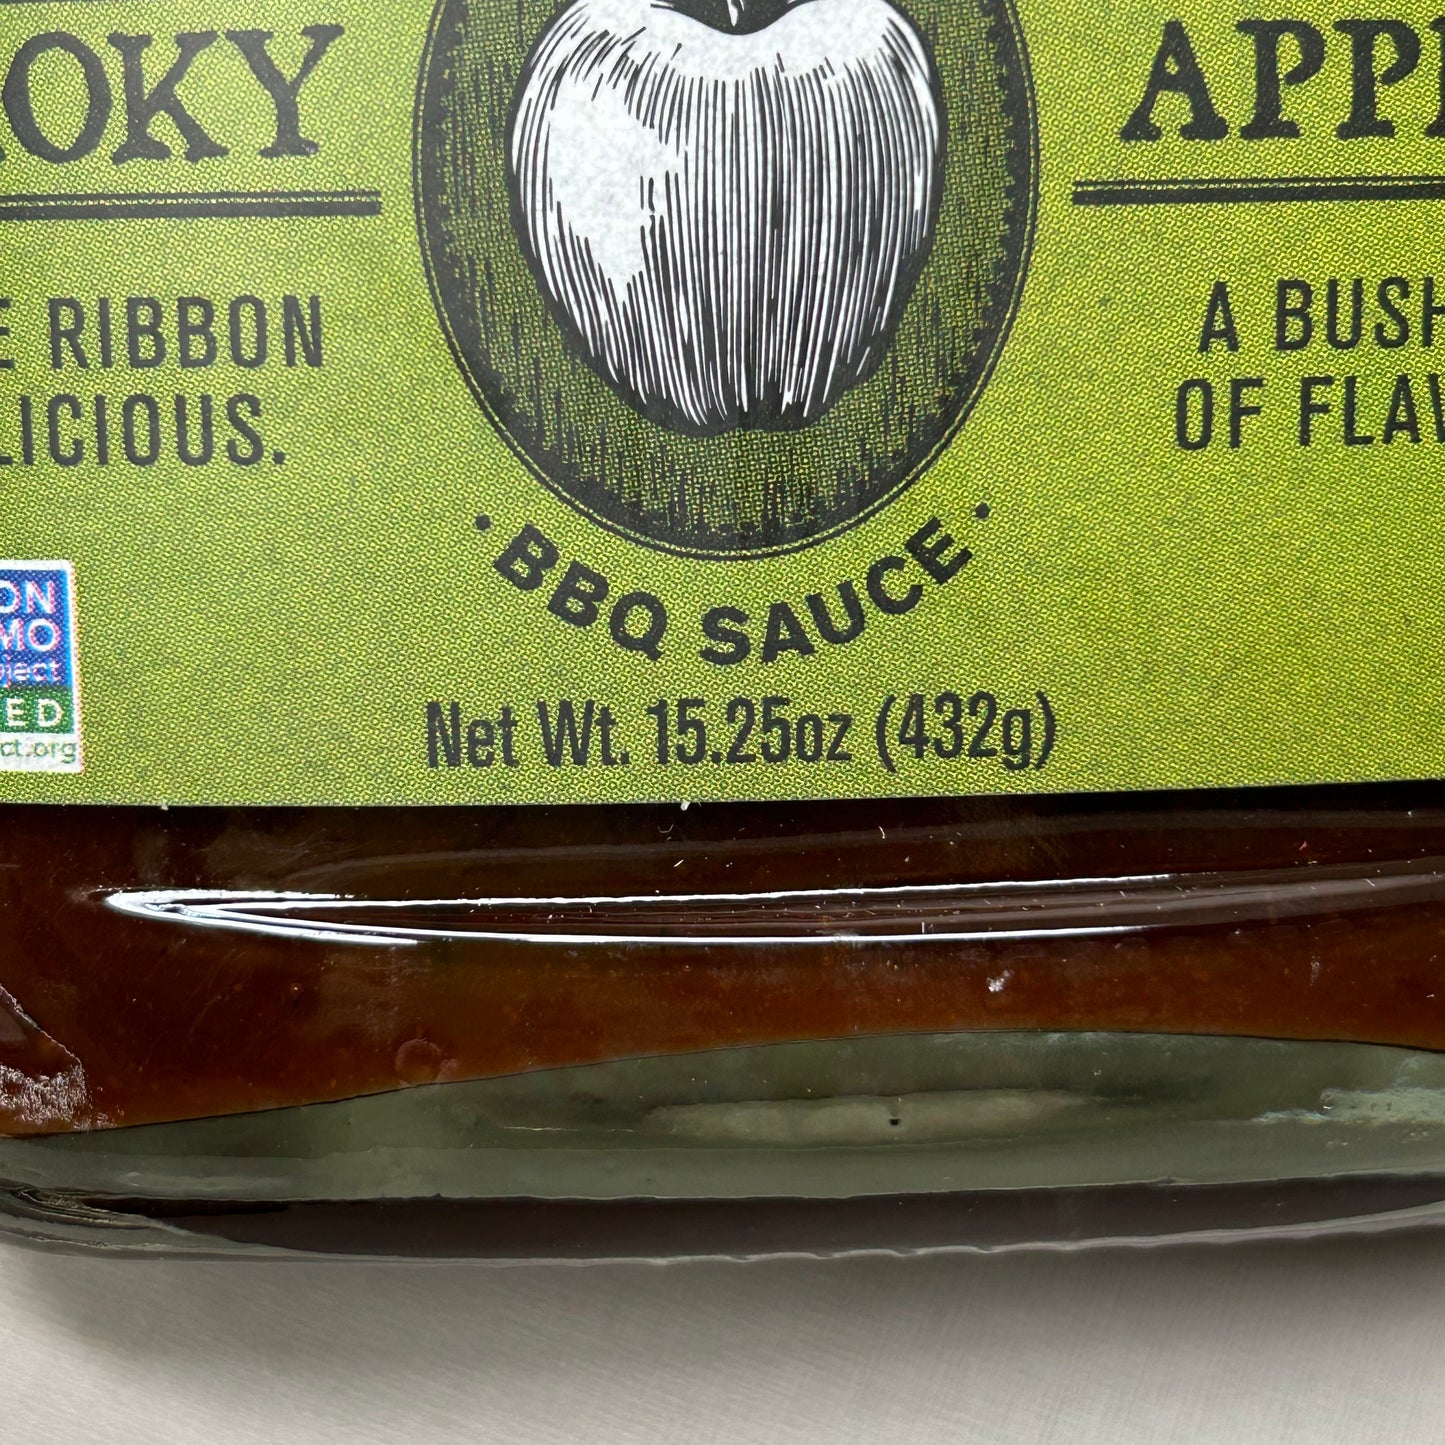 RUFUS TEAGUE 6-PACK! Smoky Apple BBQ Sauce 15.25 oz Gluten Free Non GMO Exp 12/24 New)